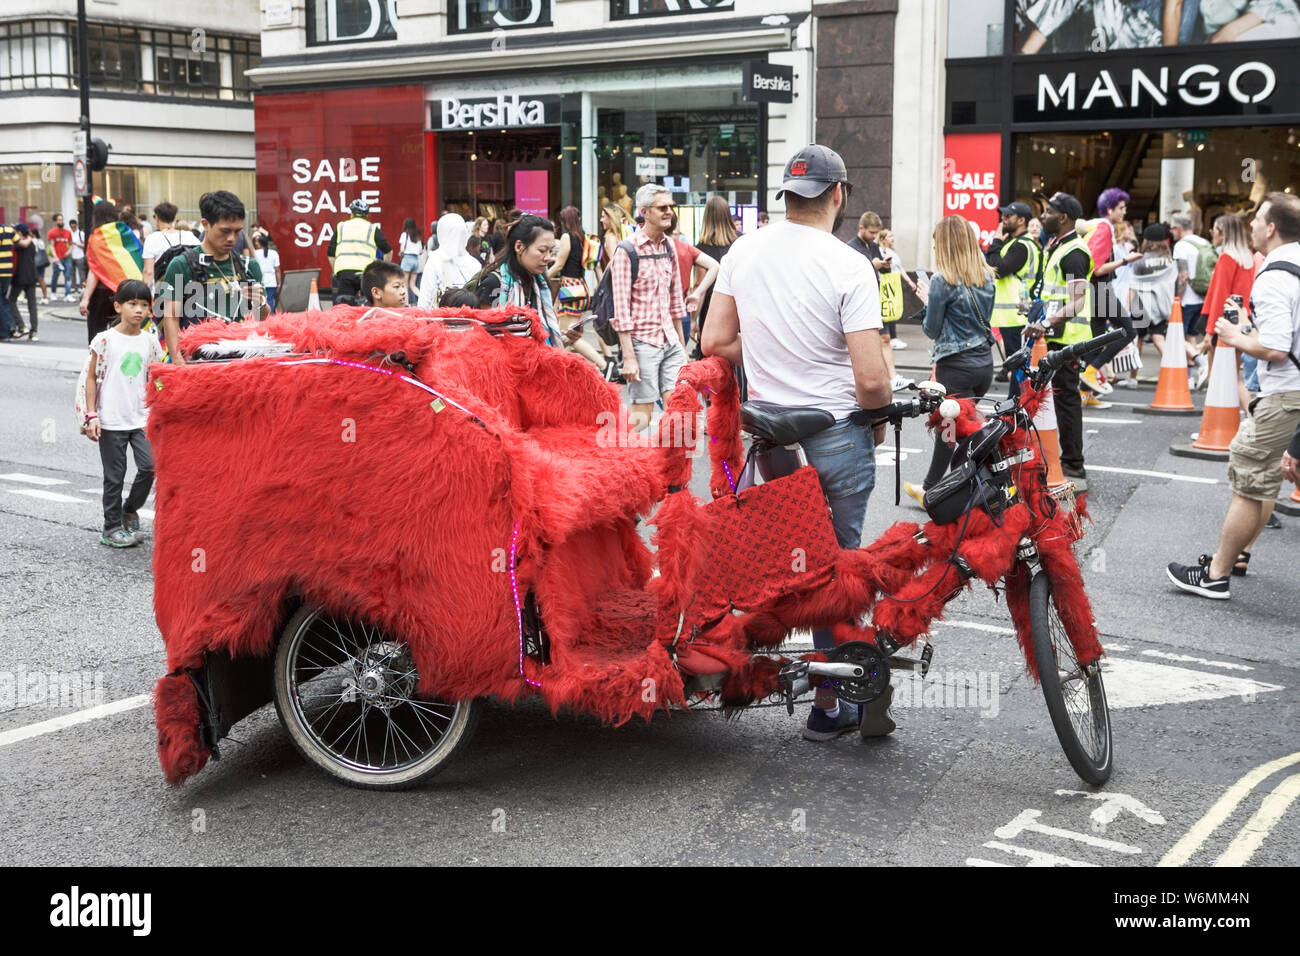 Rickshaw London. Pedicab London. Oxford Street London UK: people shopping and red tuk tuk. Stock Photo